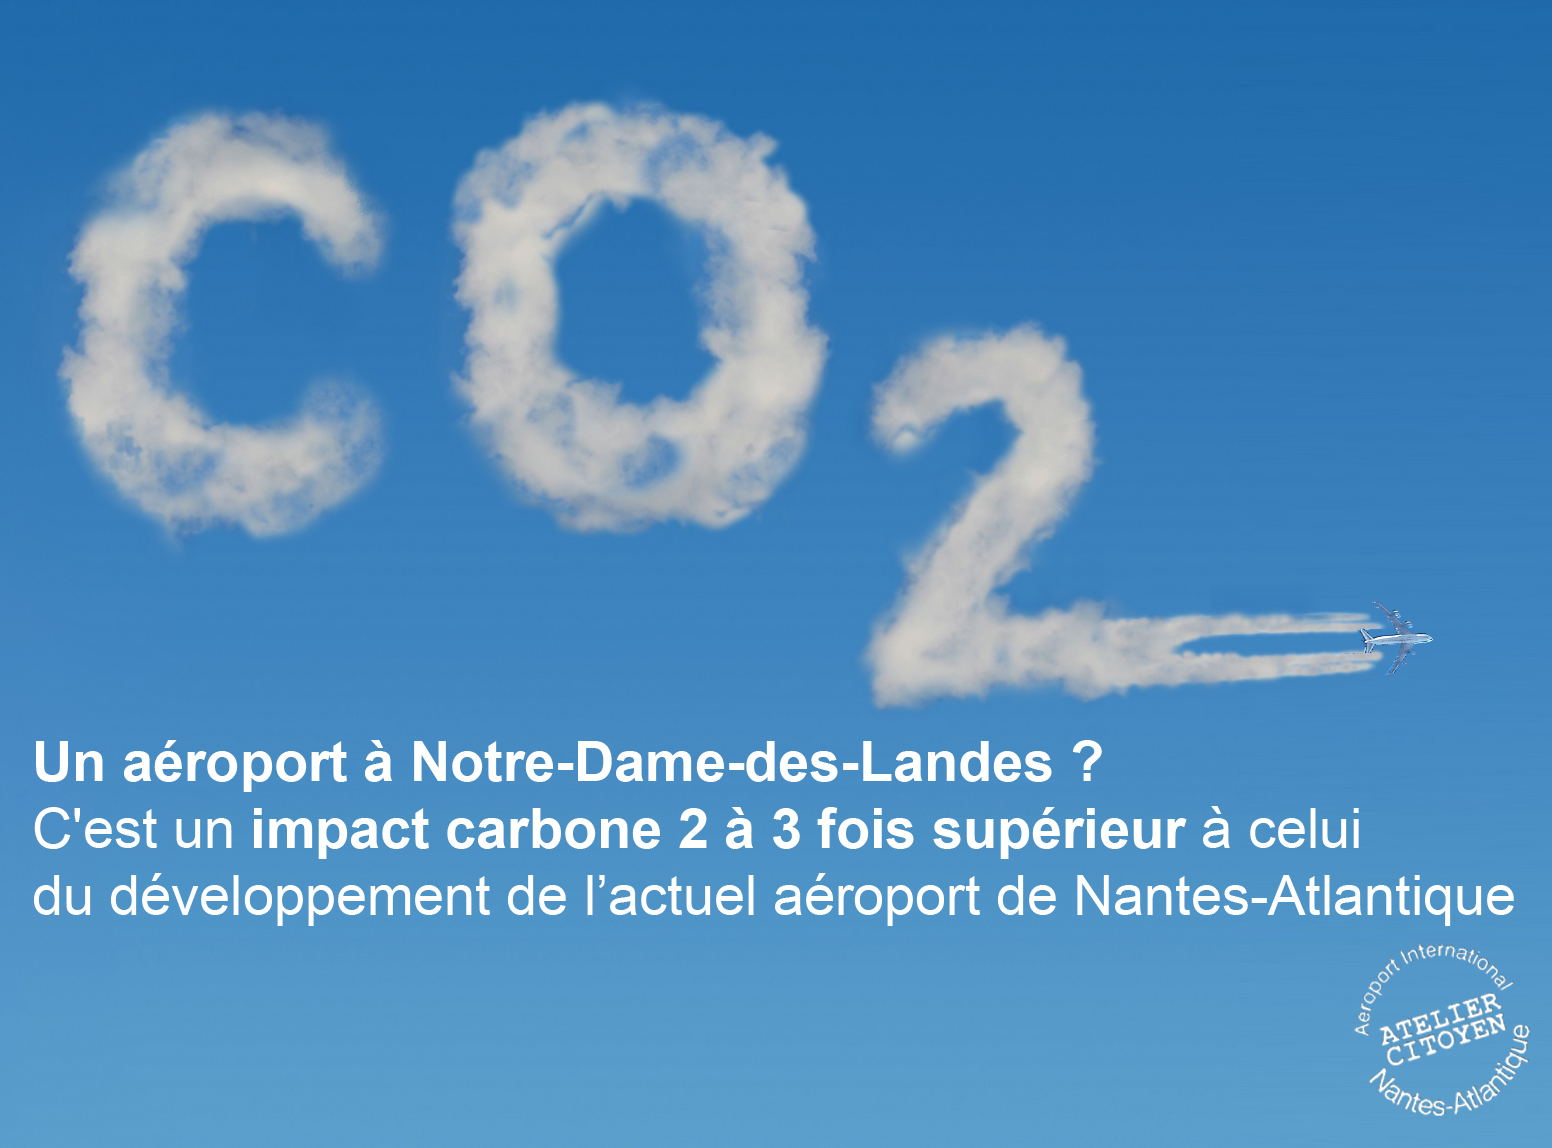 CO2 Polution (NEW!!!)